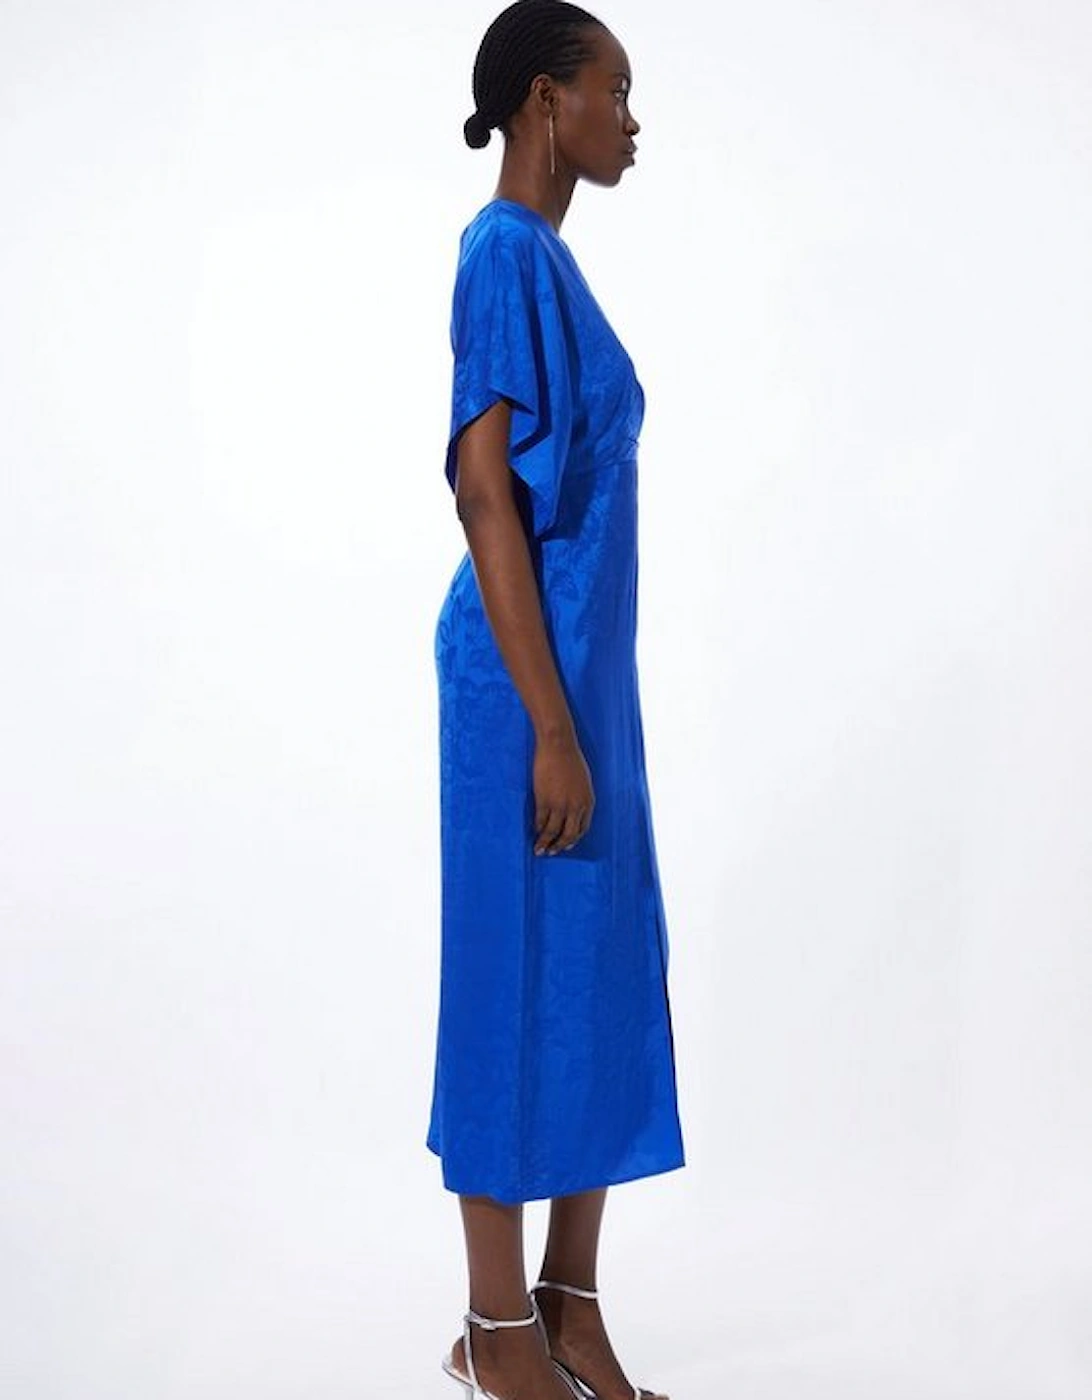 Premium Jacquard Midaxi Sleeve Woven Dress